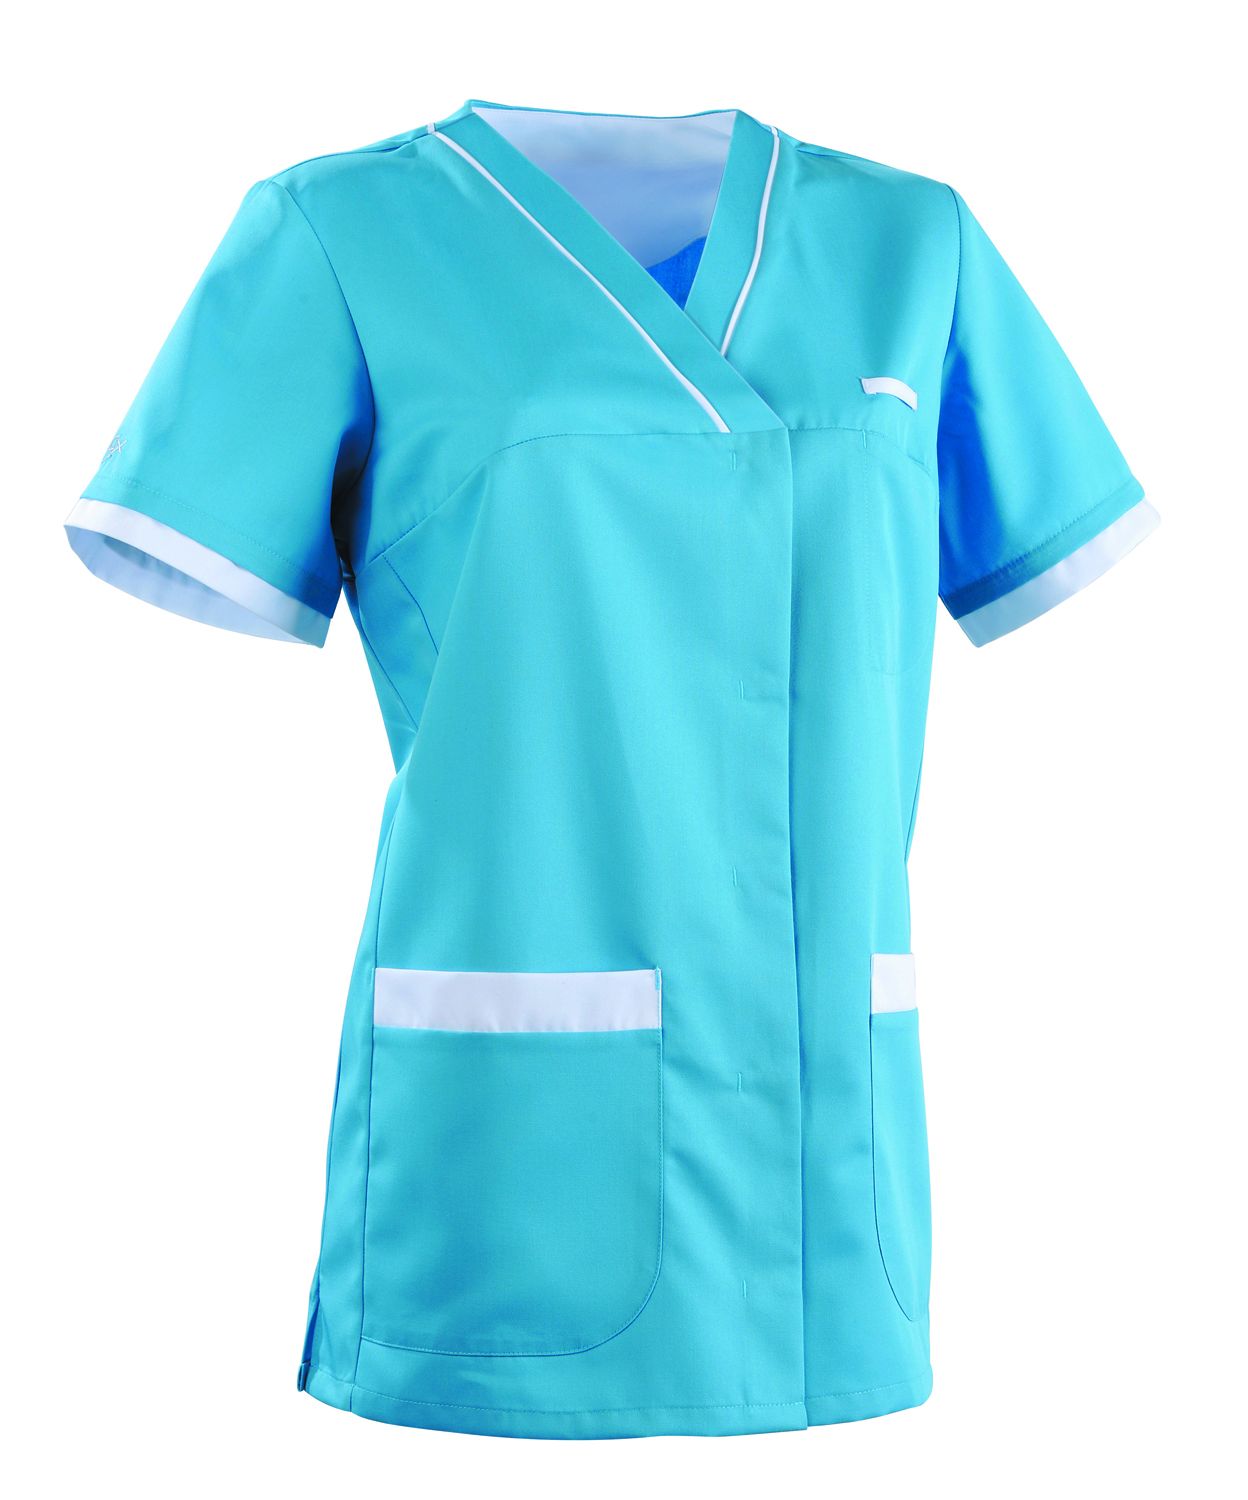 Turquoise women's medical tunic